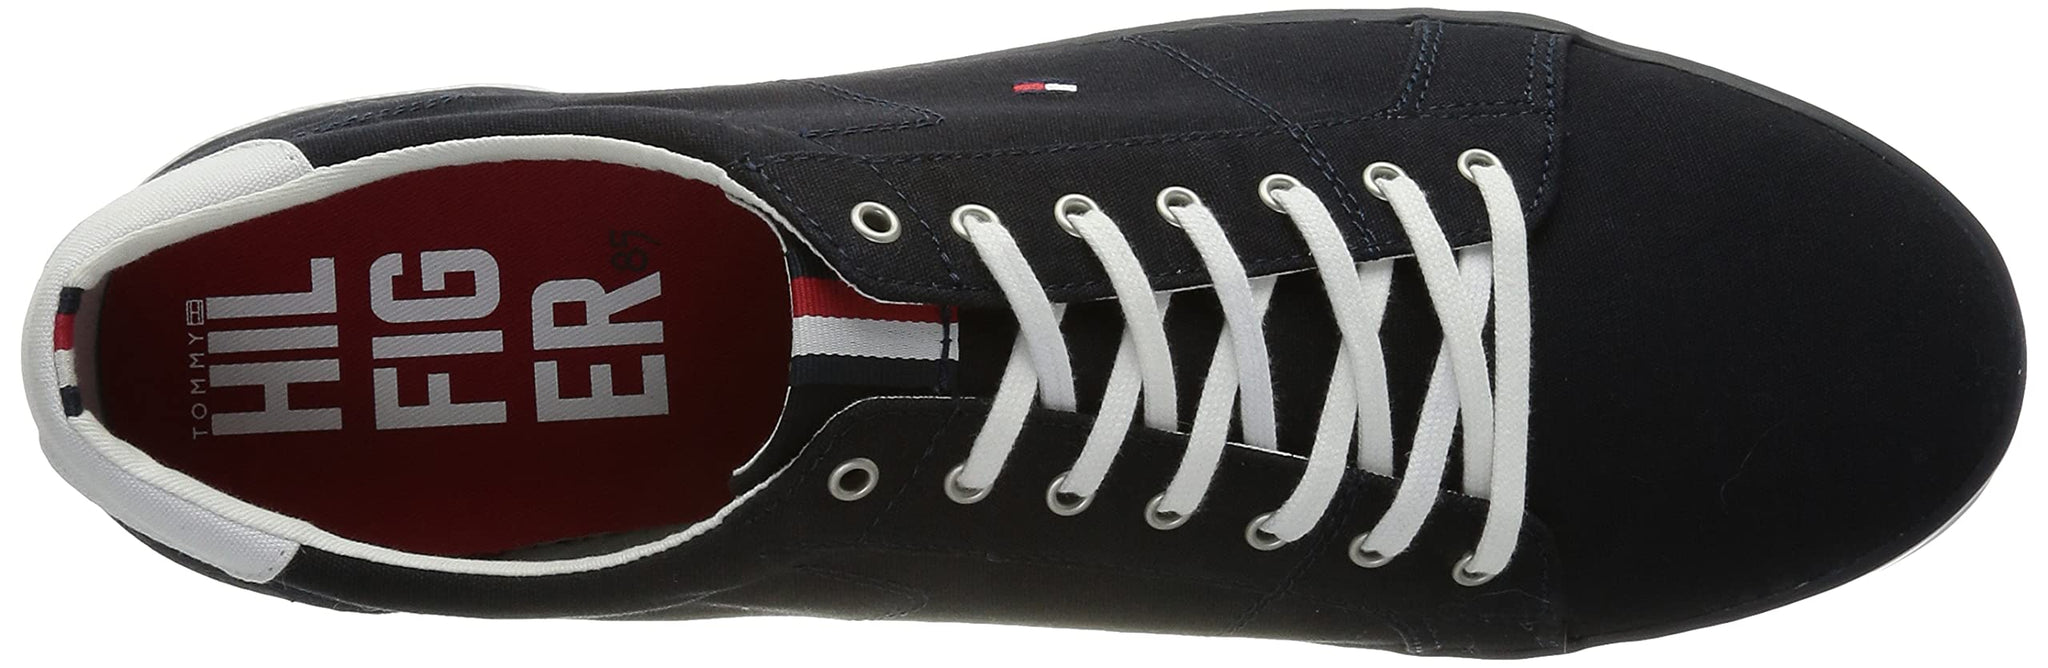 Tommy Hilfiger Men's H2285arlow 1d Low-Top Sneakers